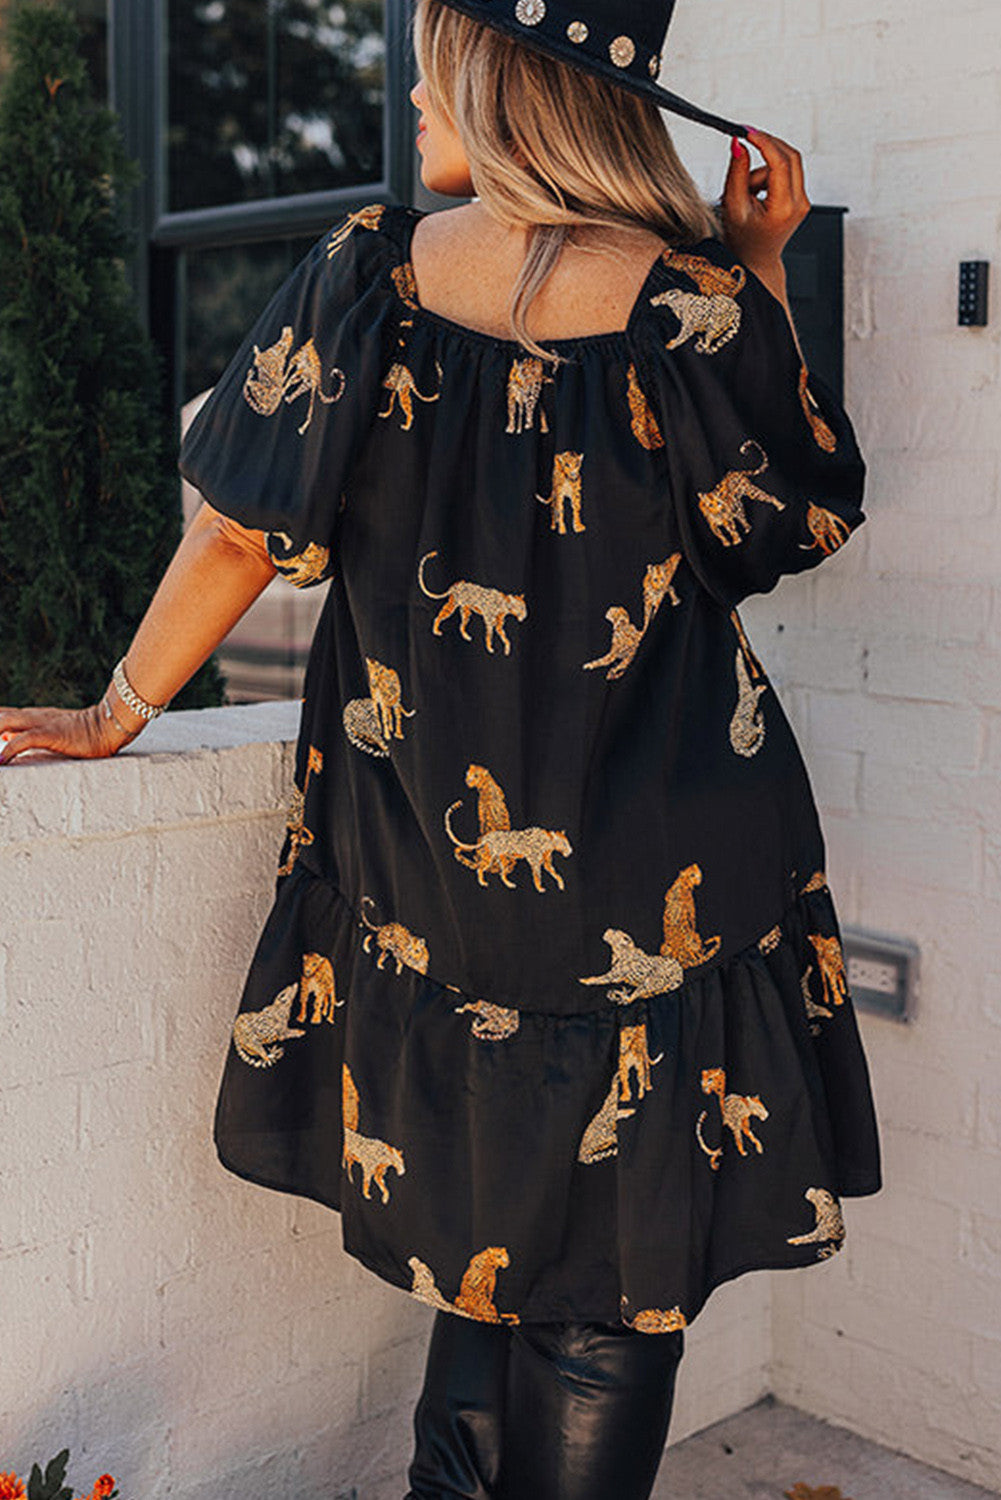 Curvy Black Cheetah Print Puff Sleeve Ruffle Dress